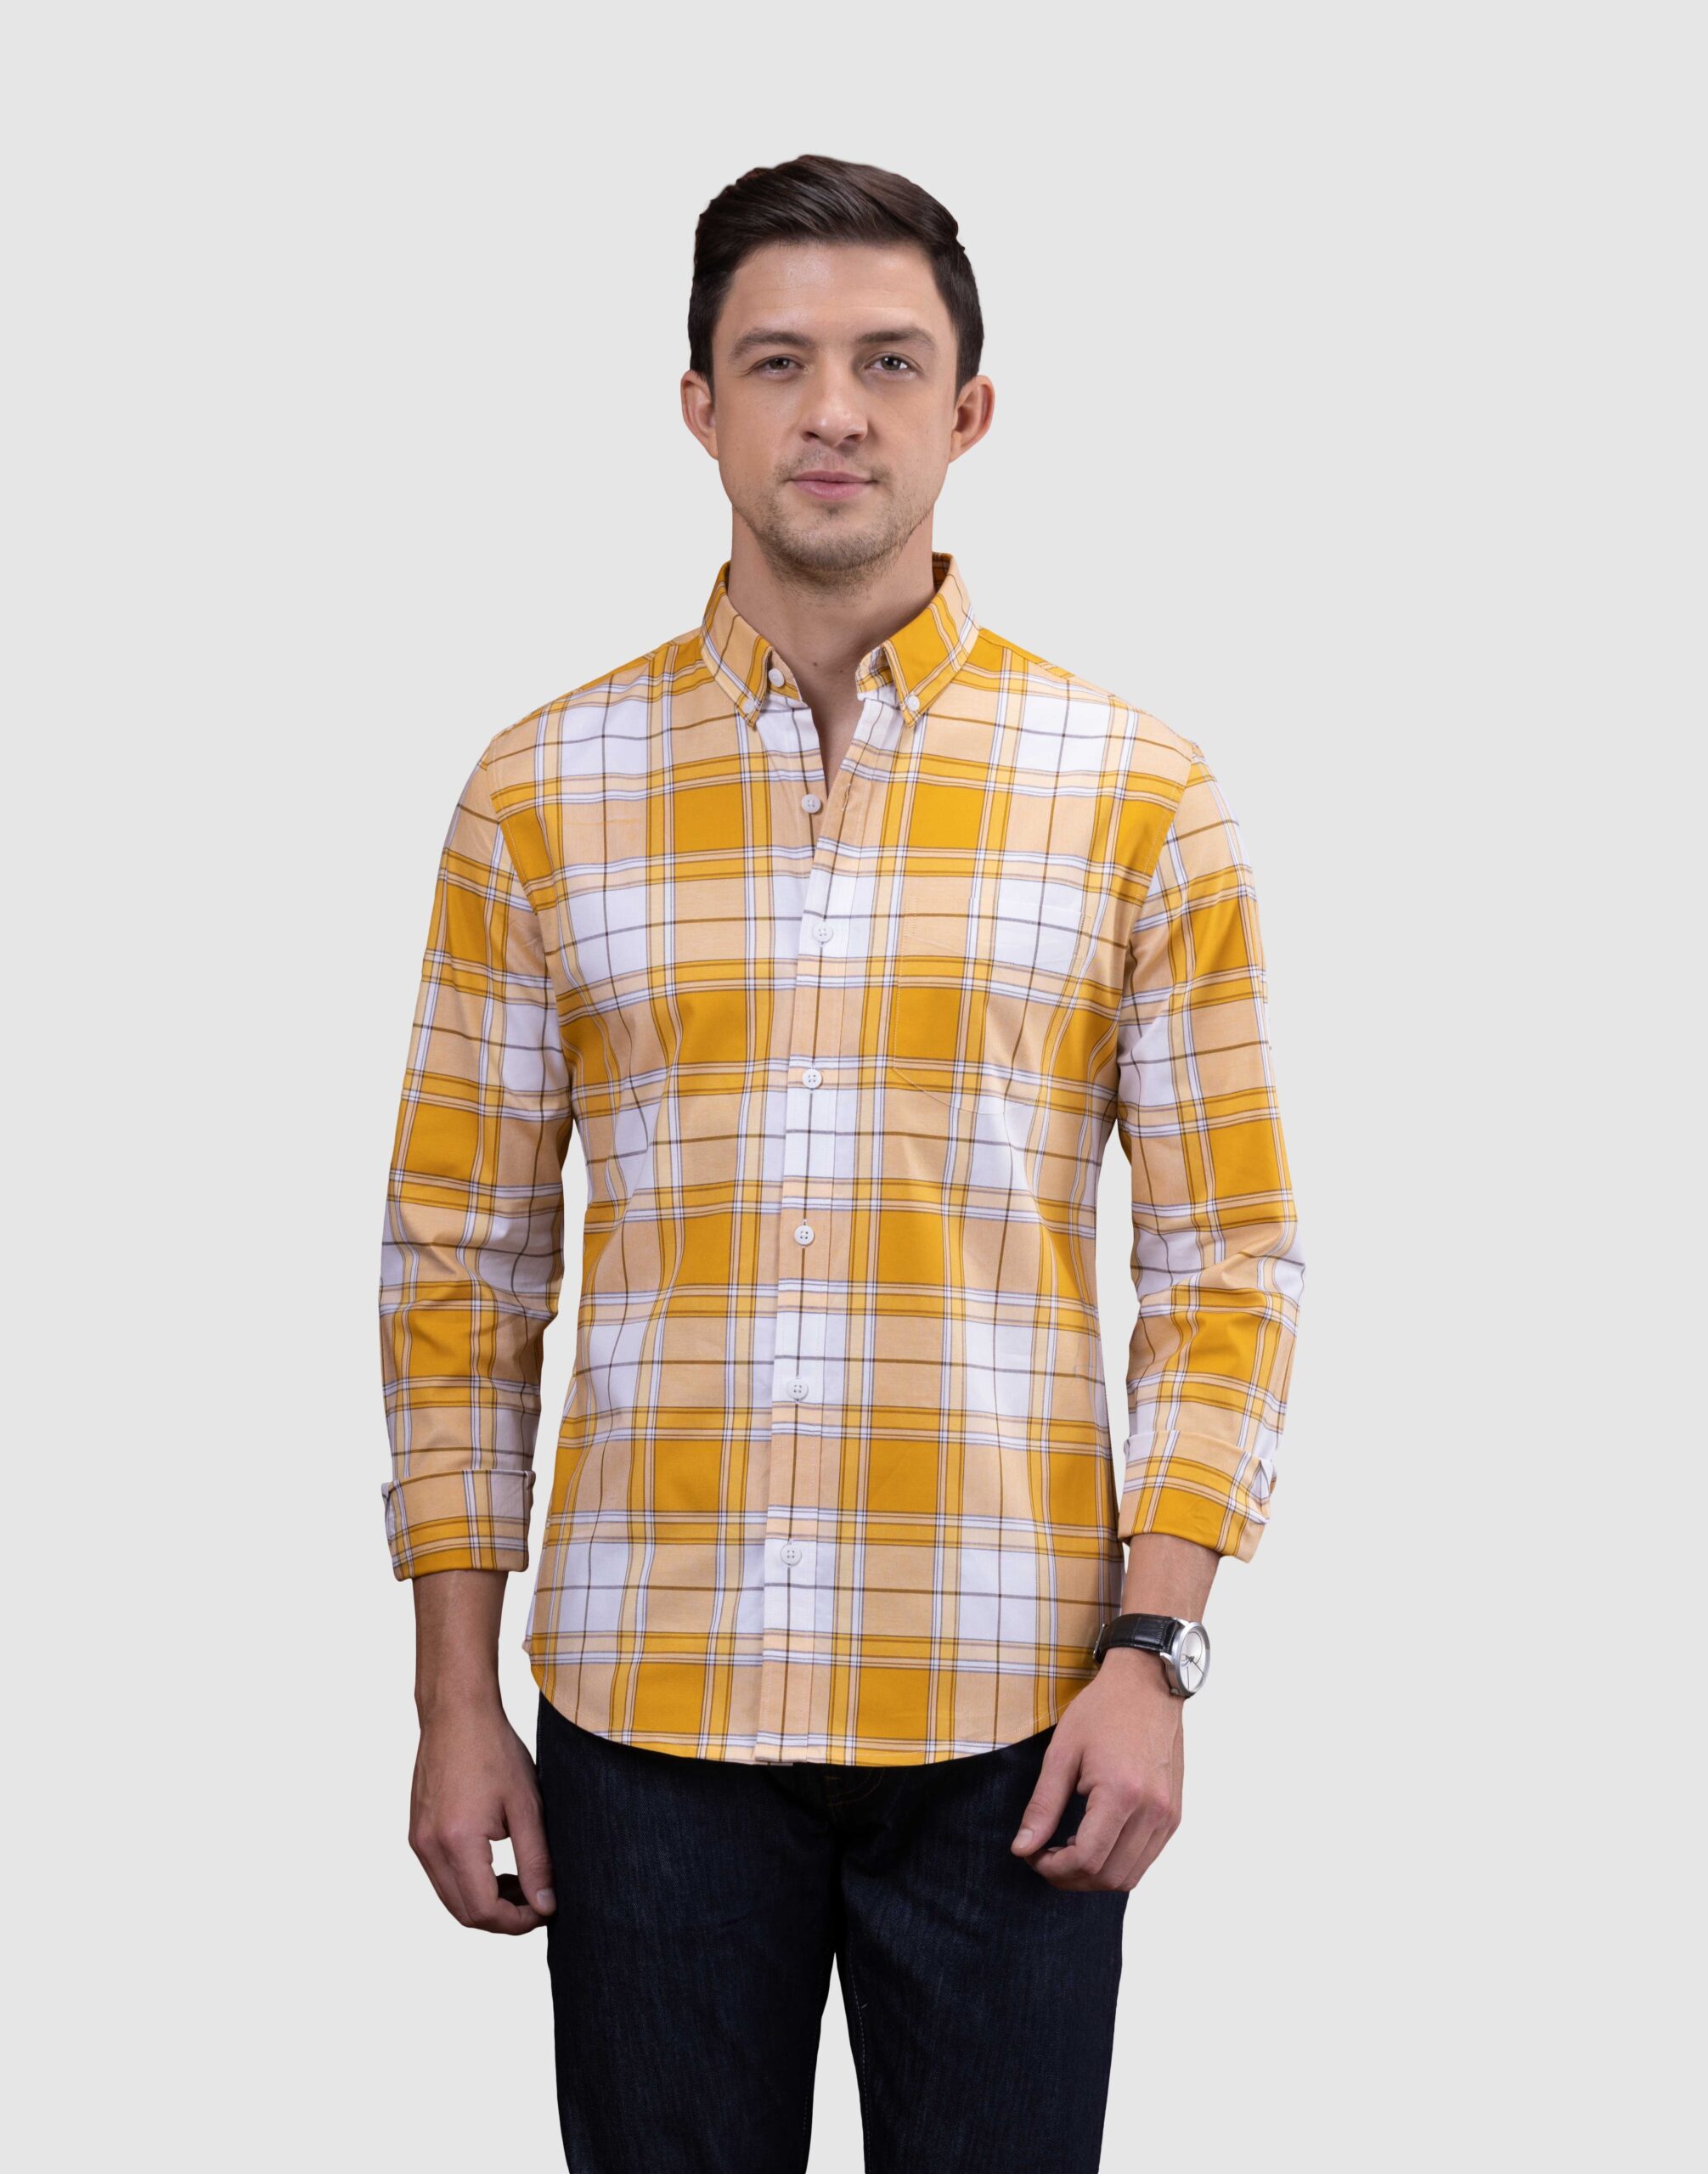 Shop men's epic yellow cotton check shirt.